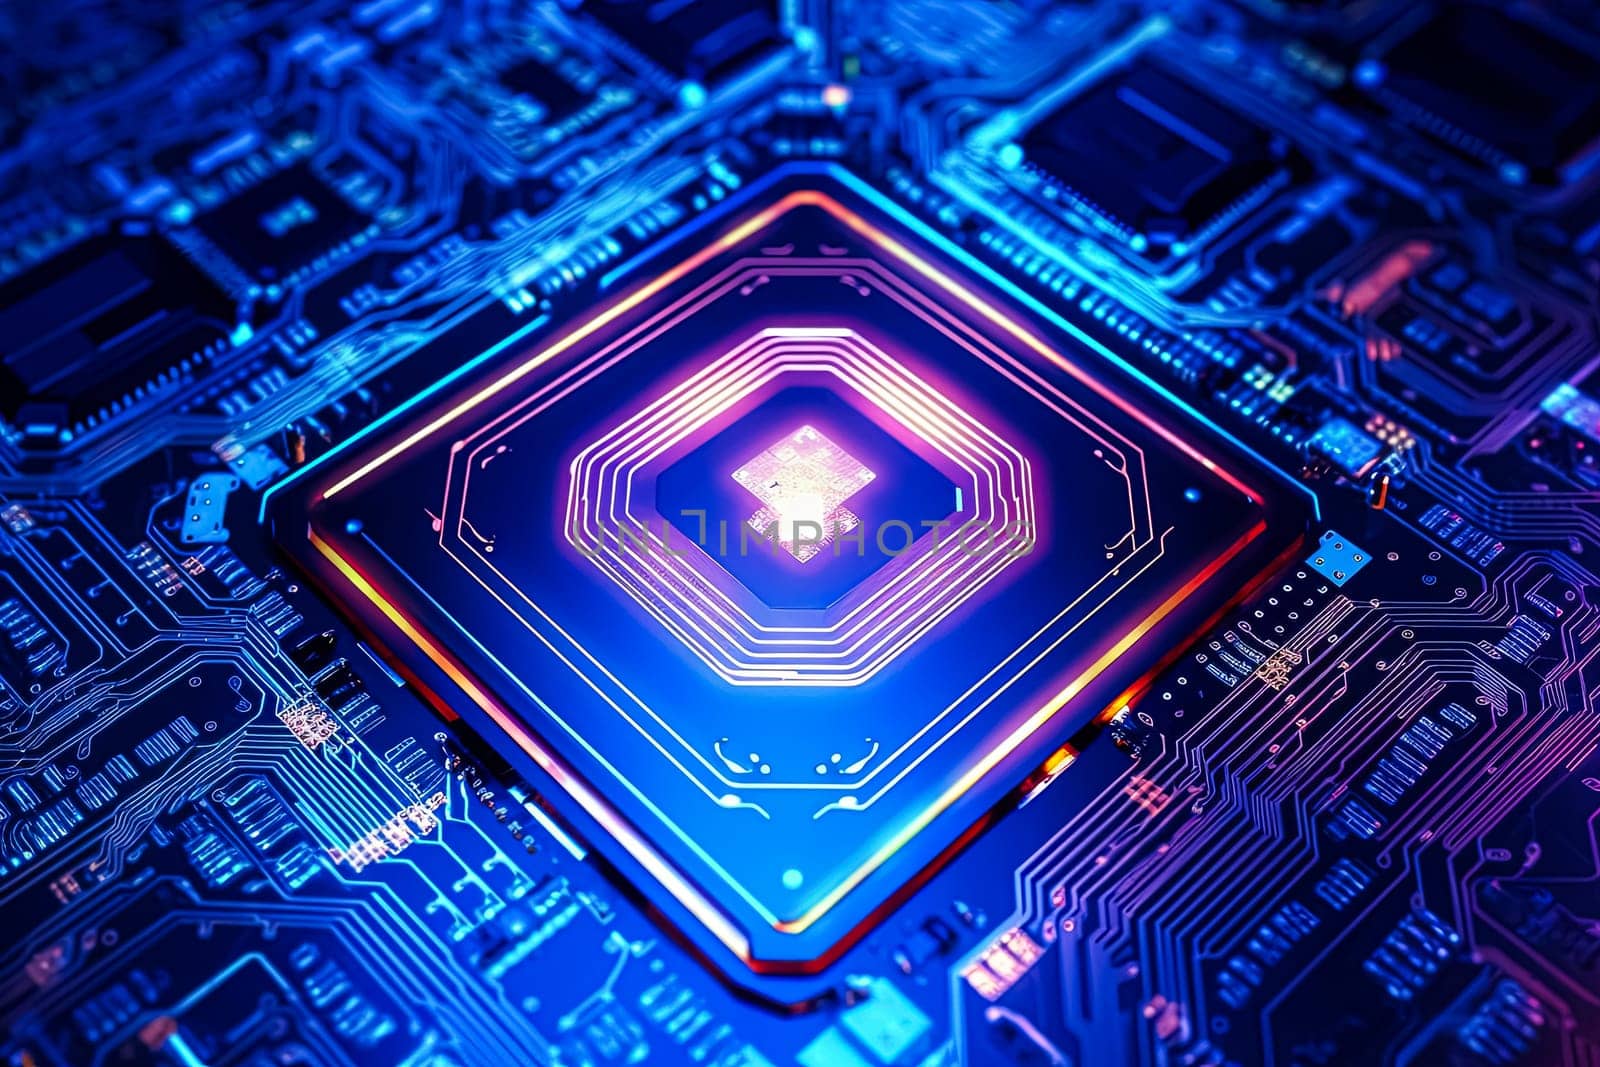 A computer chip is shown in a blue and purple color scheme by Alla_Morozova93